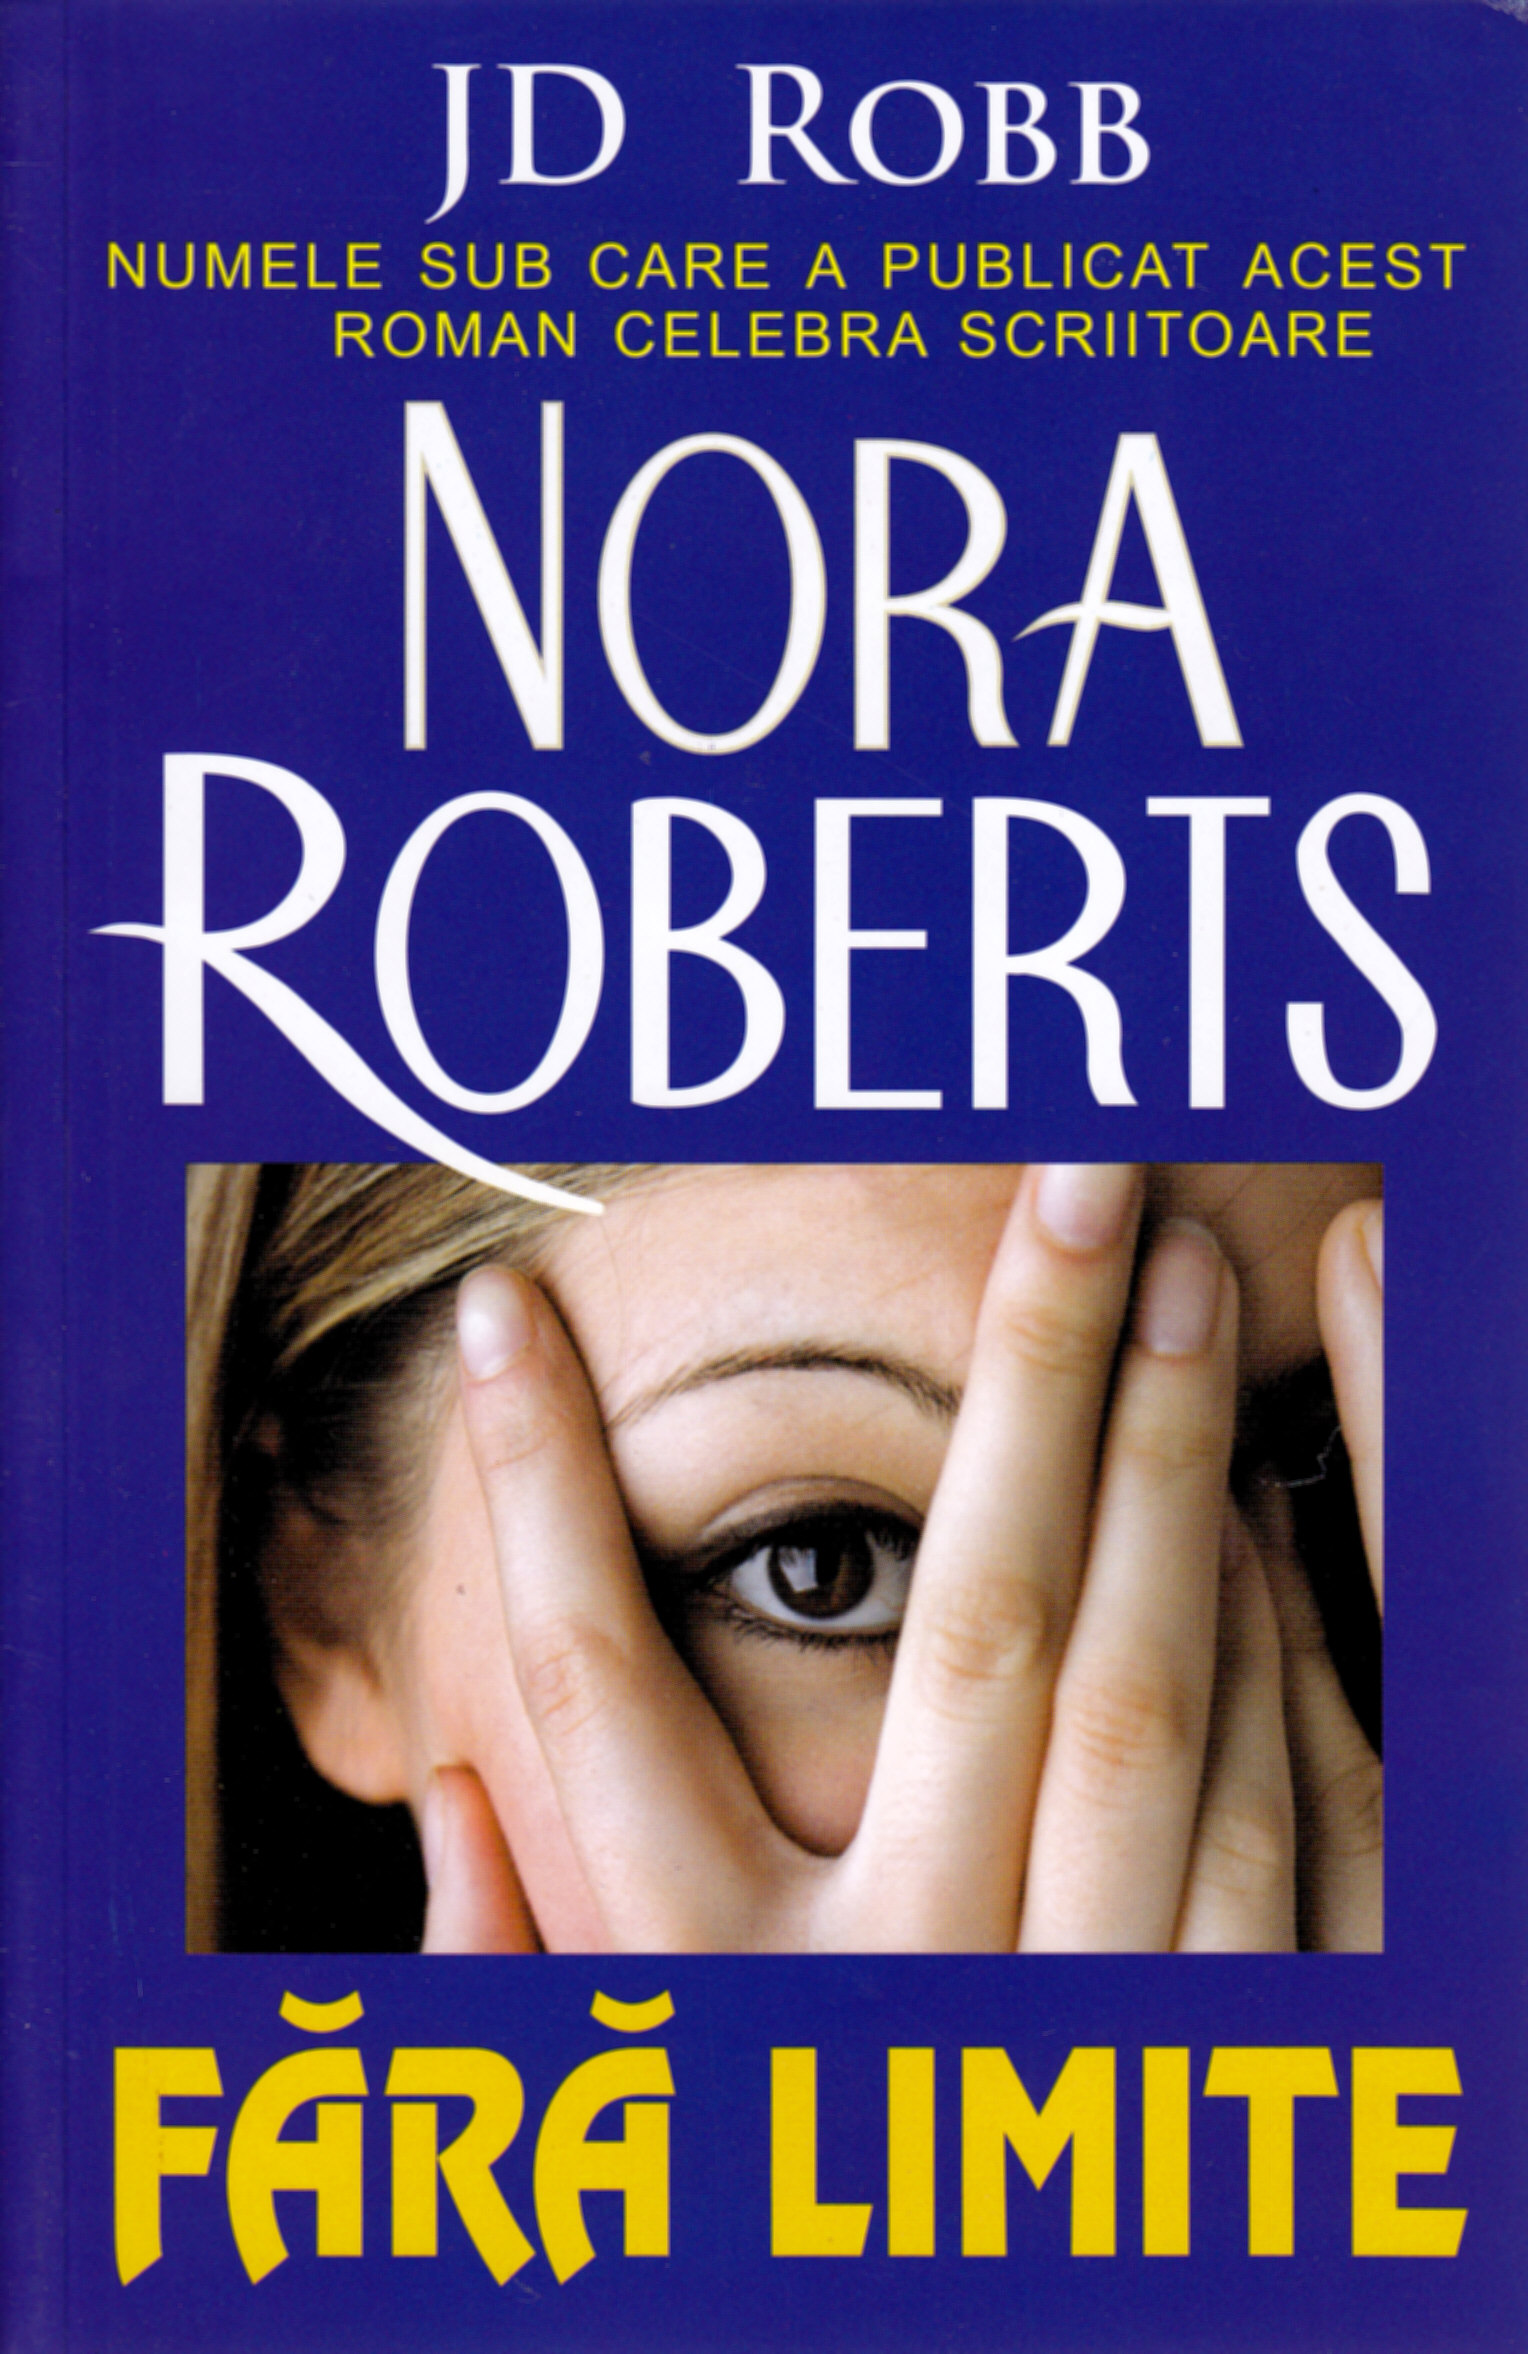 Fara limite - J.D. Robb (Nora Roberts)